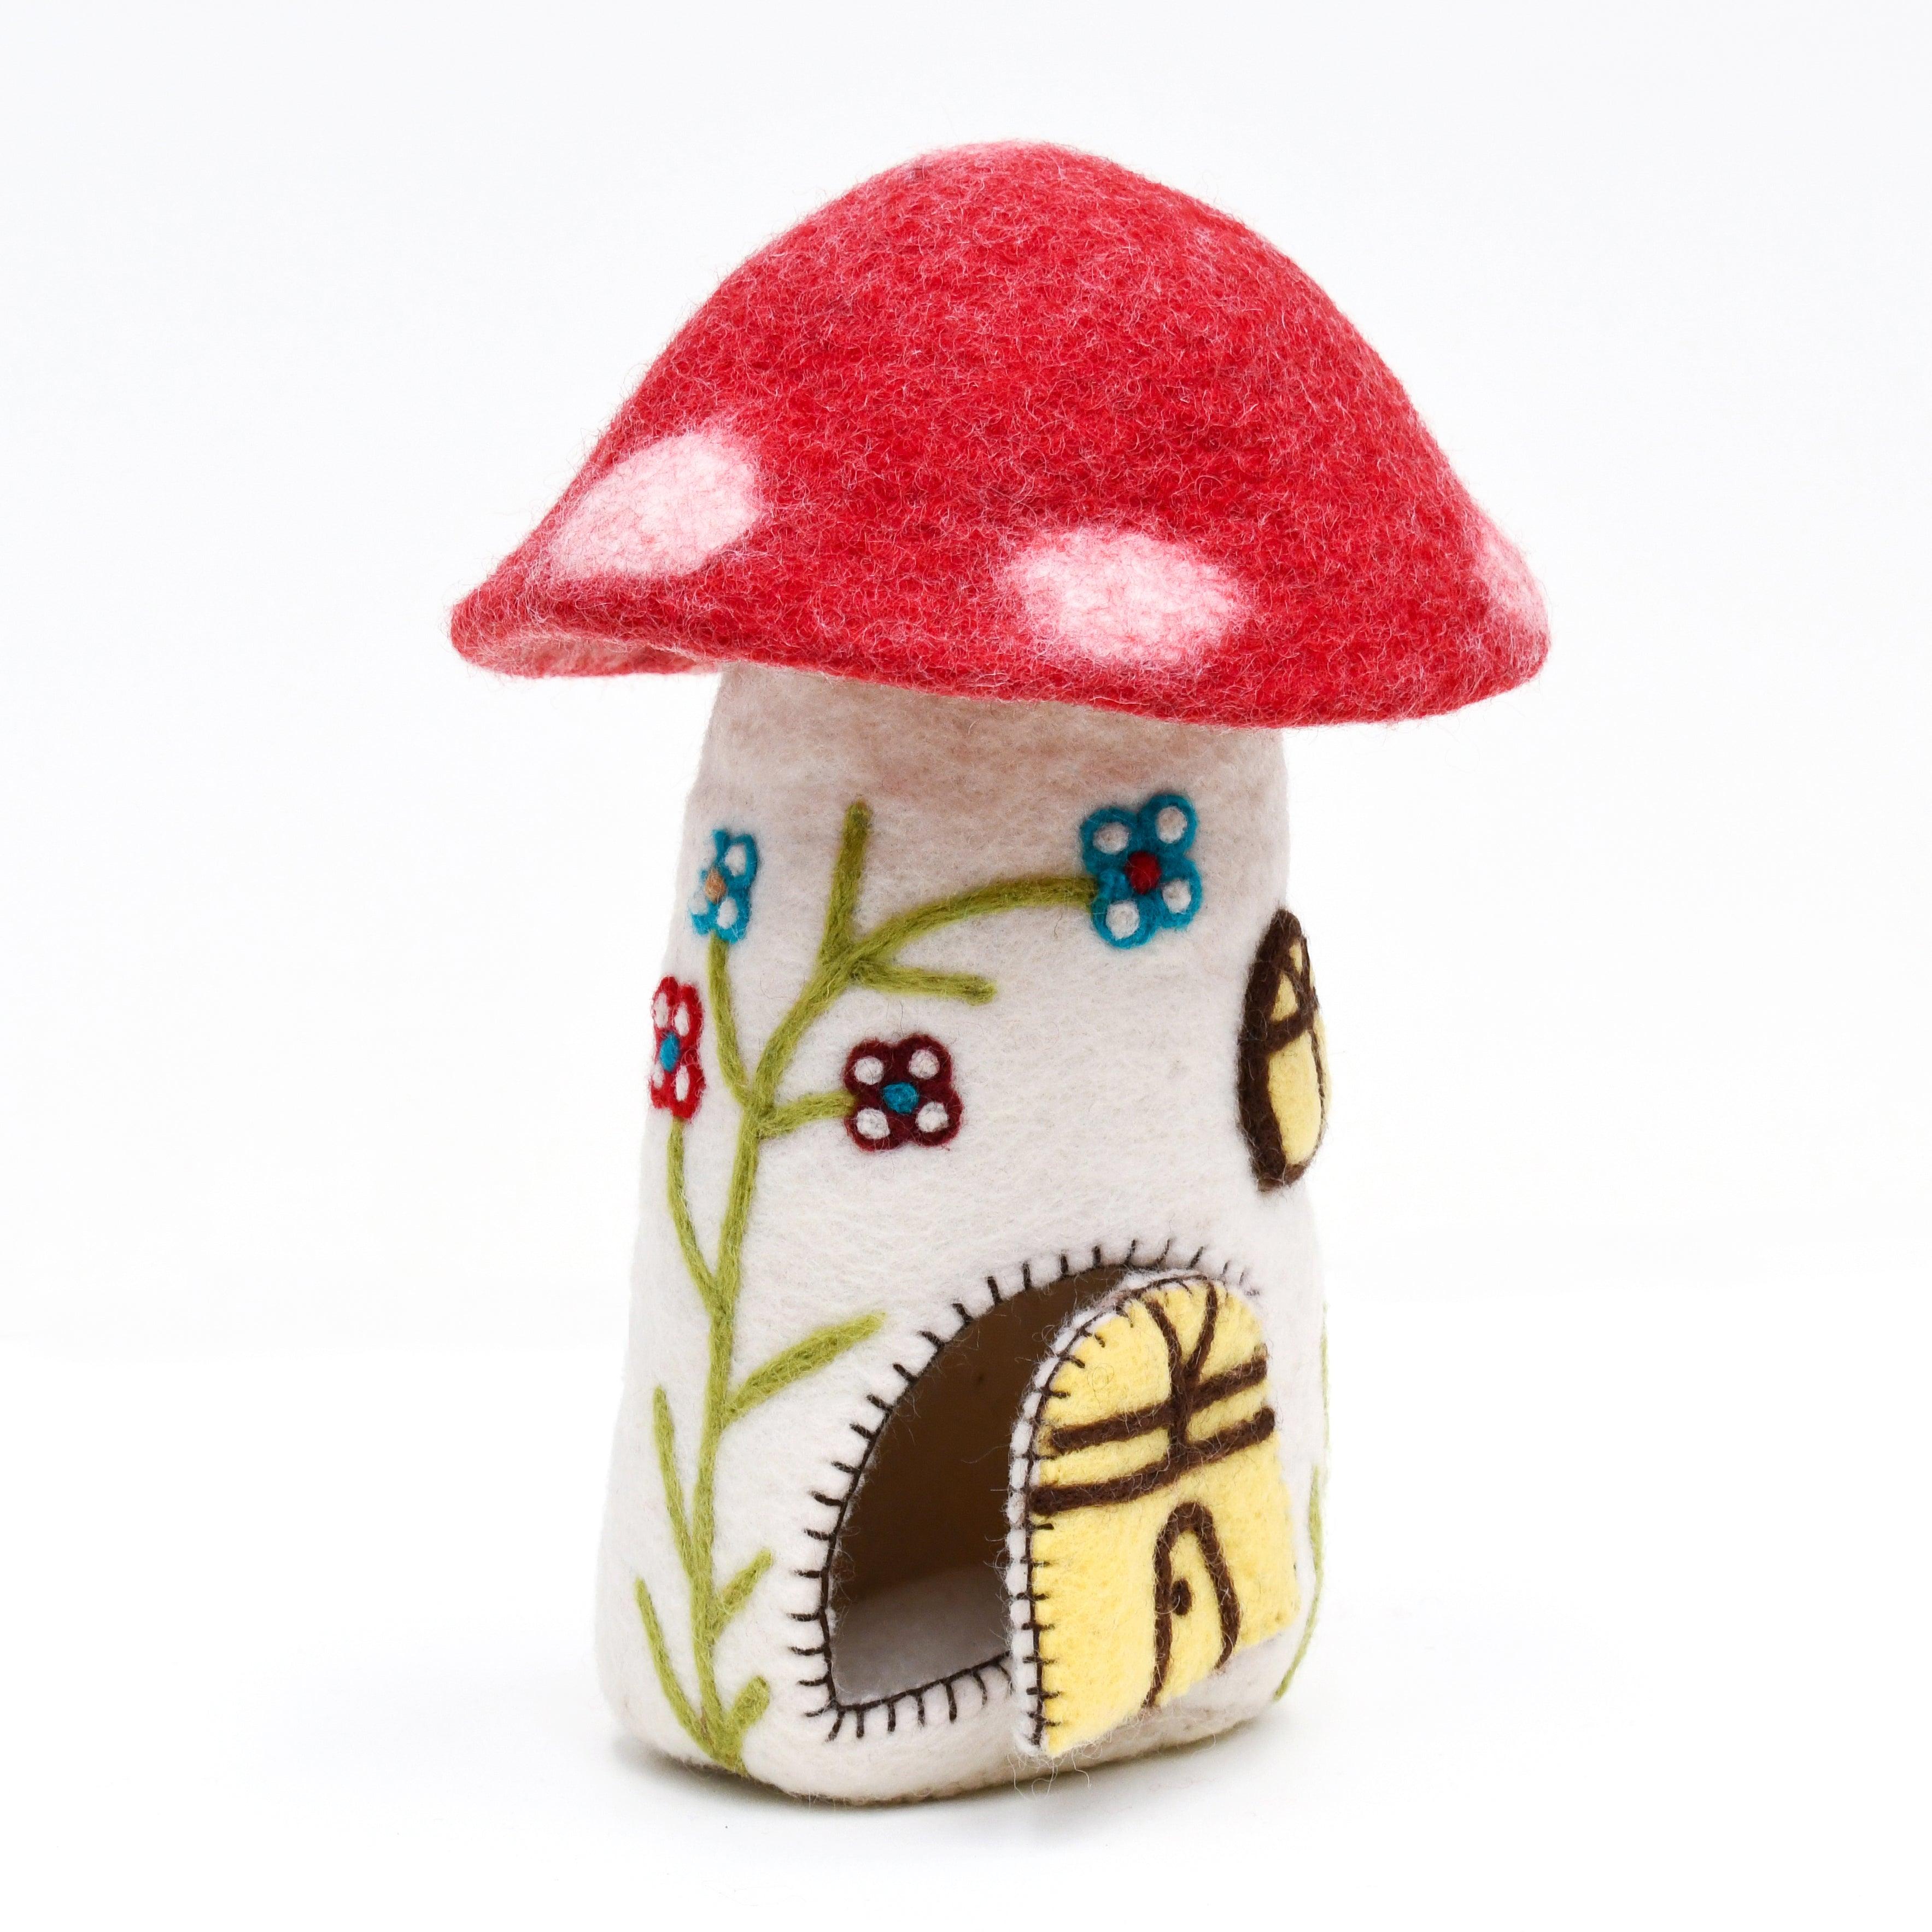 Fairies and Gnomes House - Red Mushroom (Toadstool) - Tara Treasures